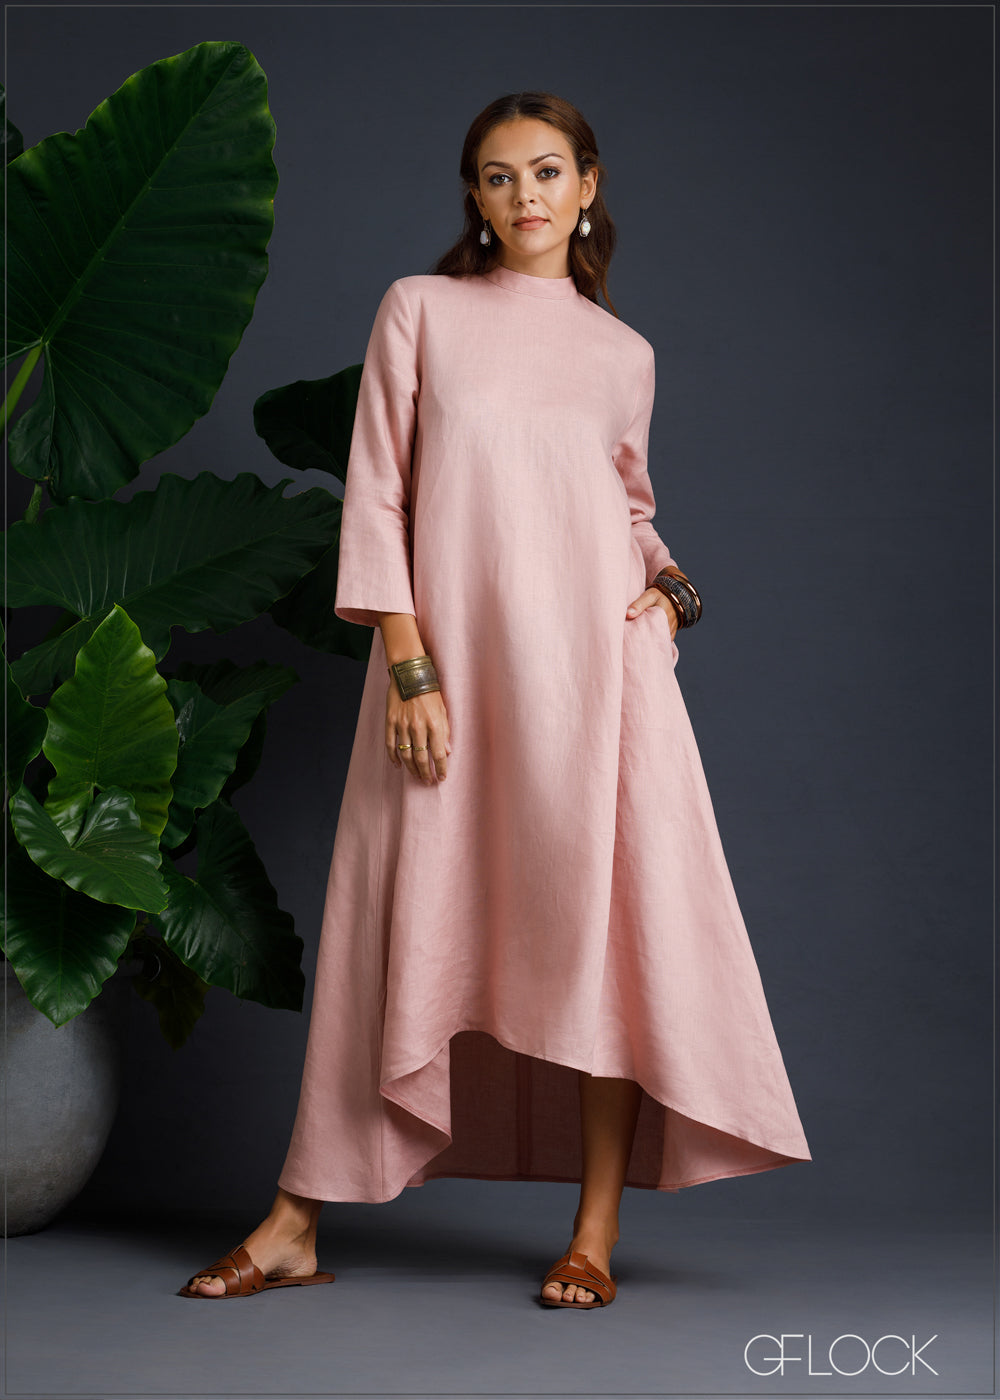 100% Genuine Linen High-Low Hem Dress - 080124